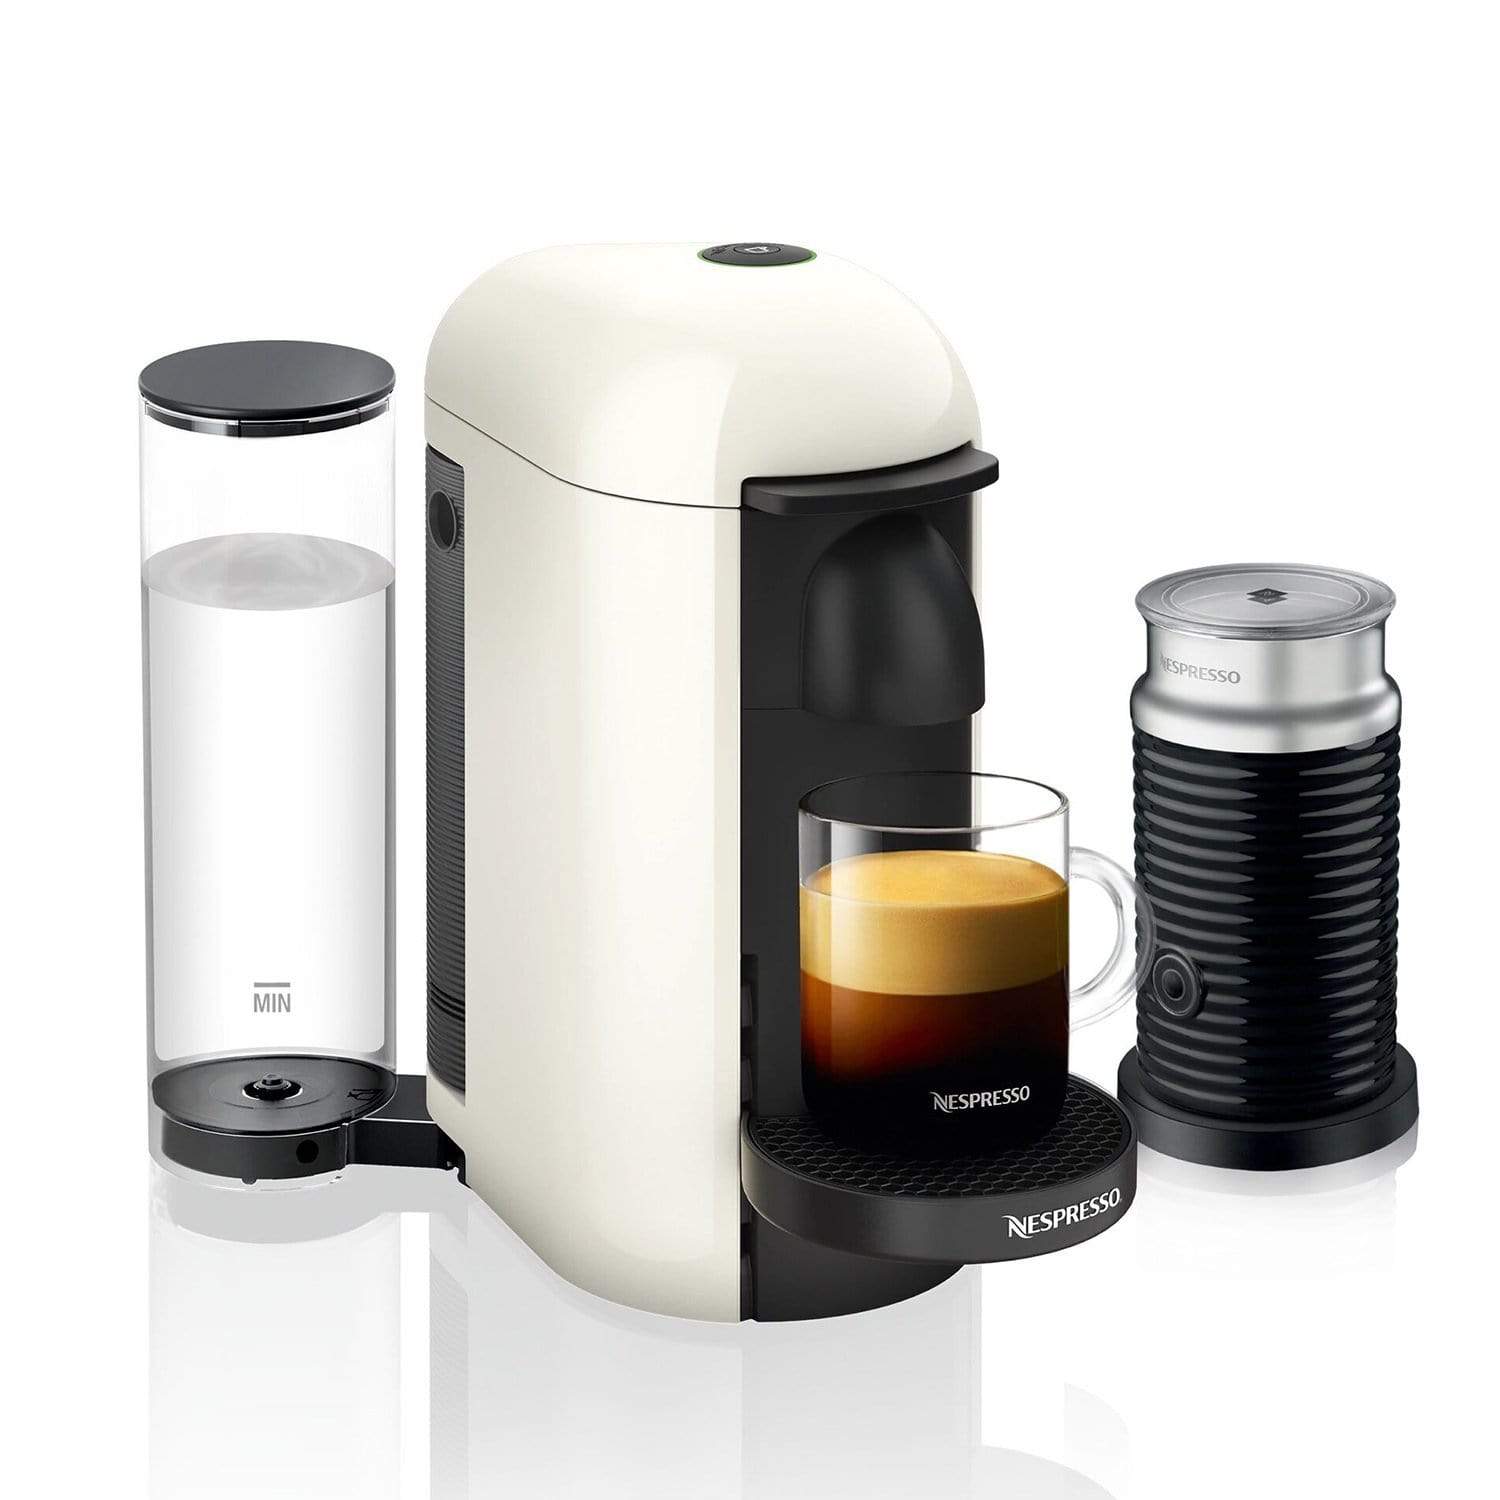 Nespresso ماكينة صنع القهوة فيرتو بلس - أبيض وأسود - GCB2-BU-WH - Jashanmal Home